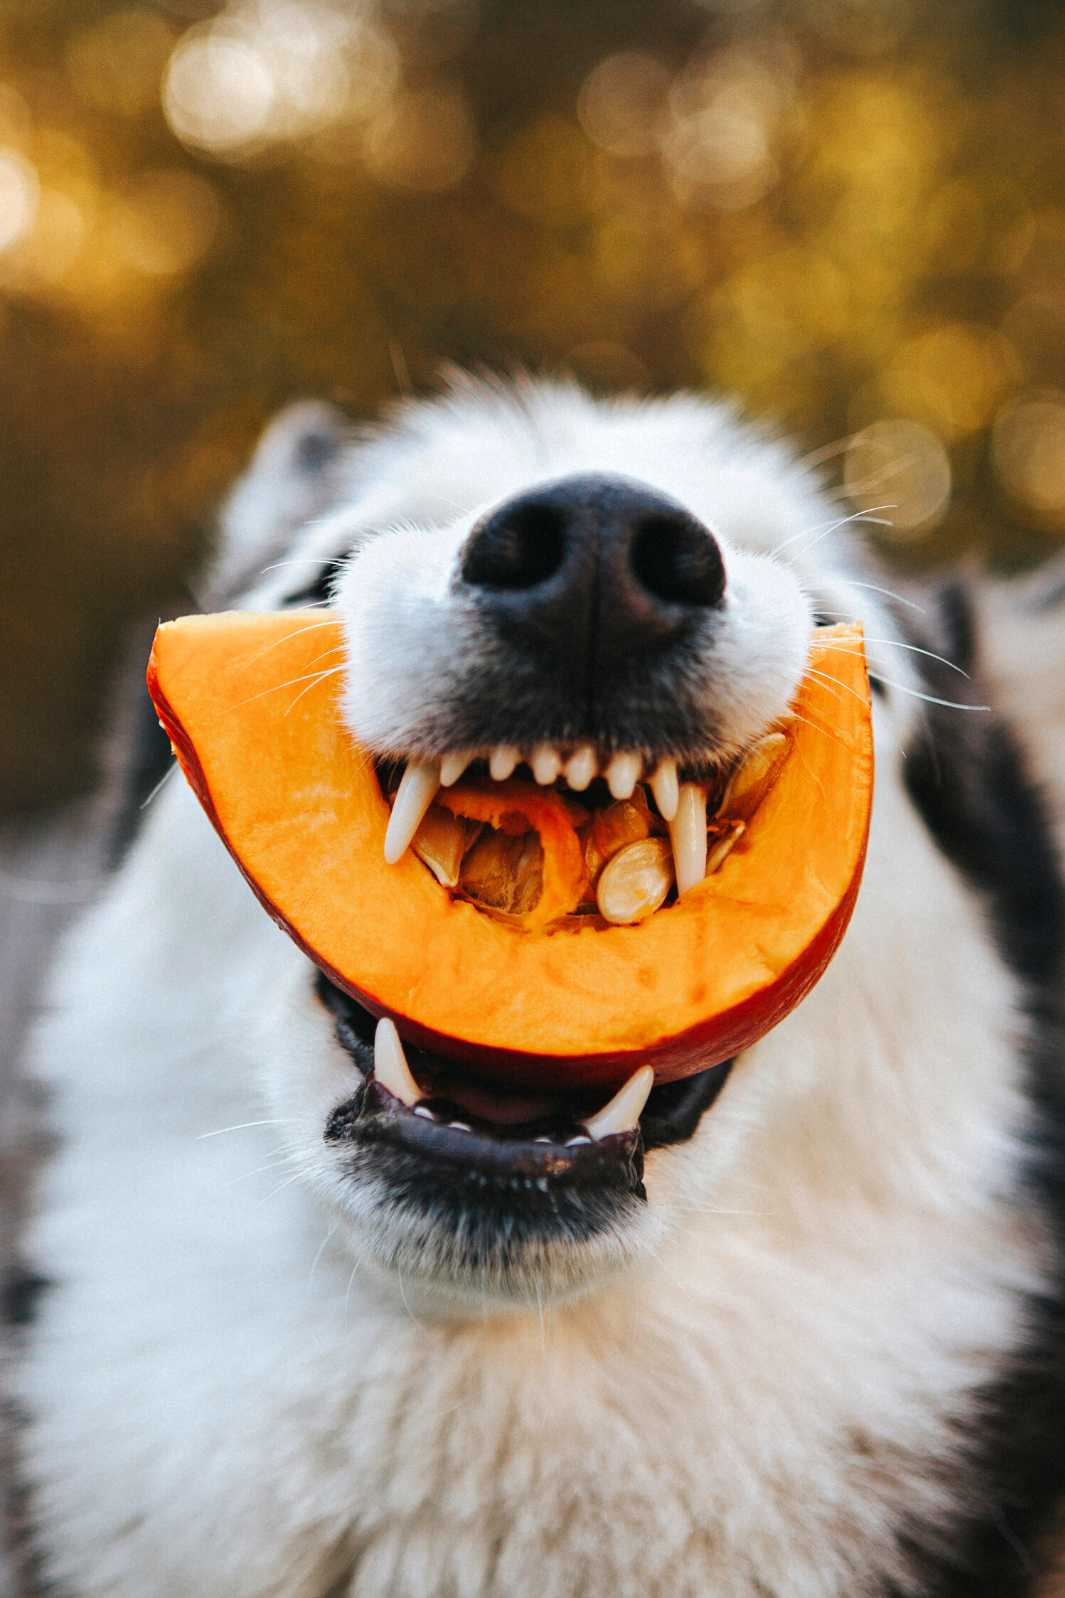 Siberian Husky Dog eating a slice of pumpkin as a dog treat.